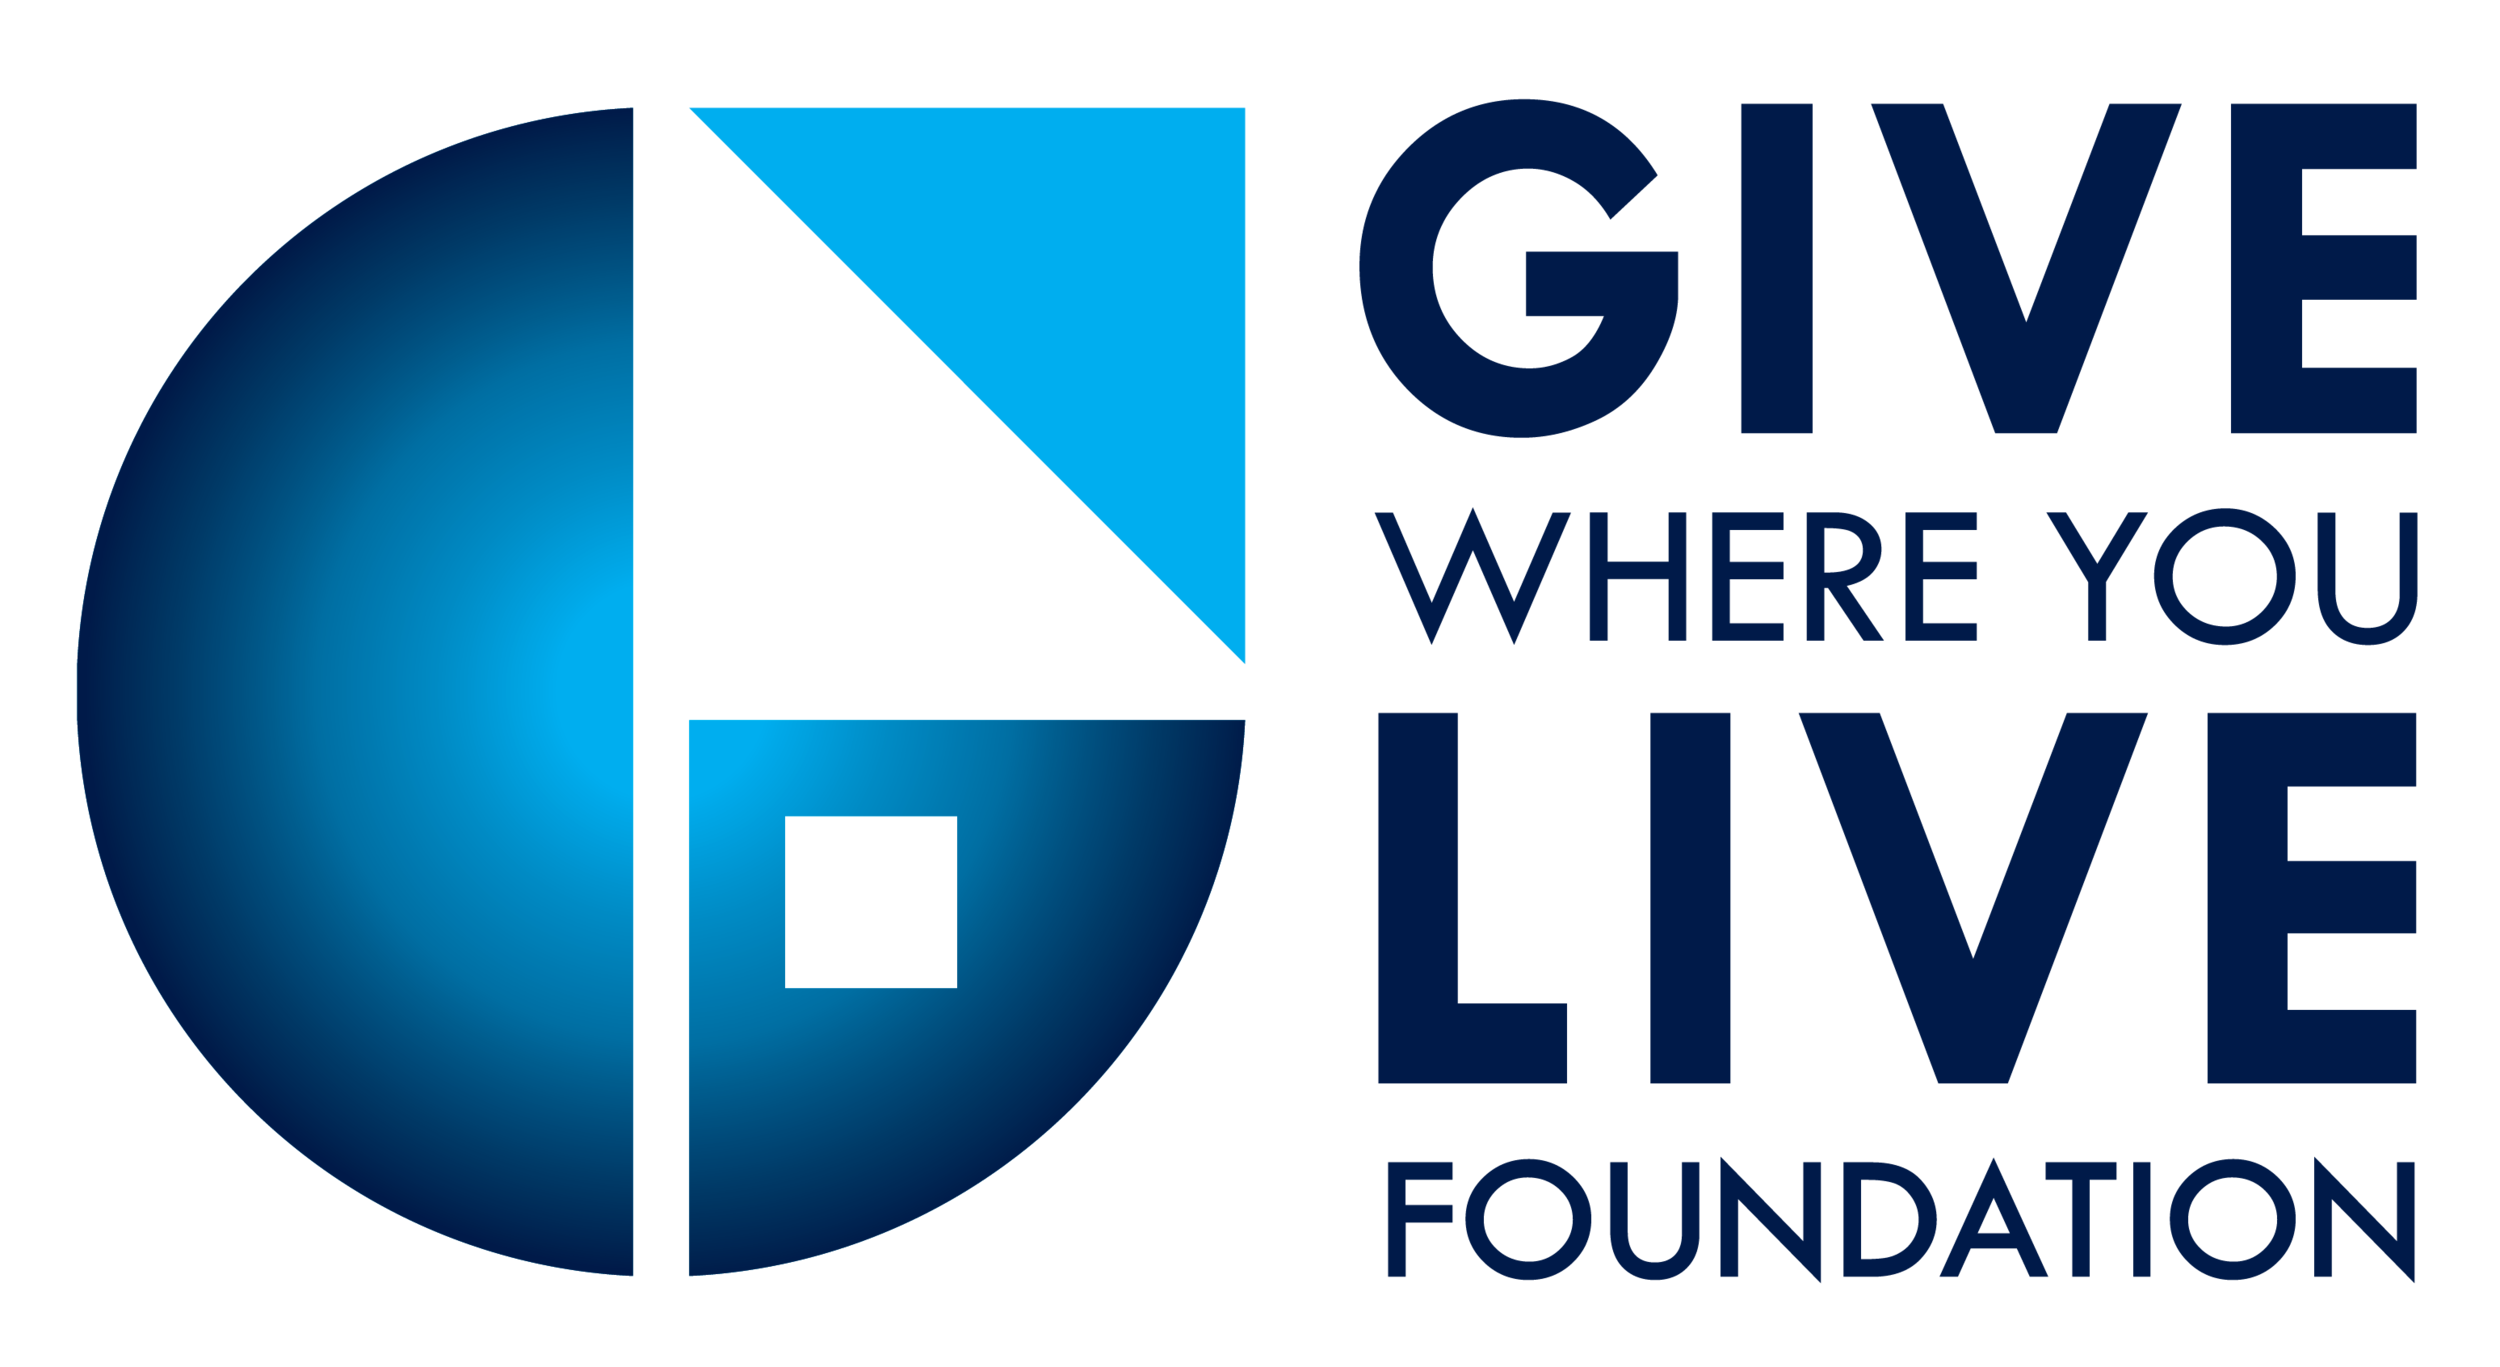 GWYL Logo Foundation-01 - withouttagline.png